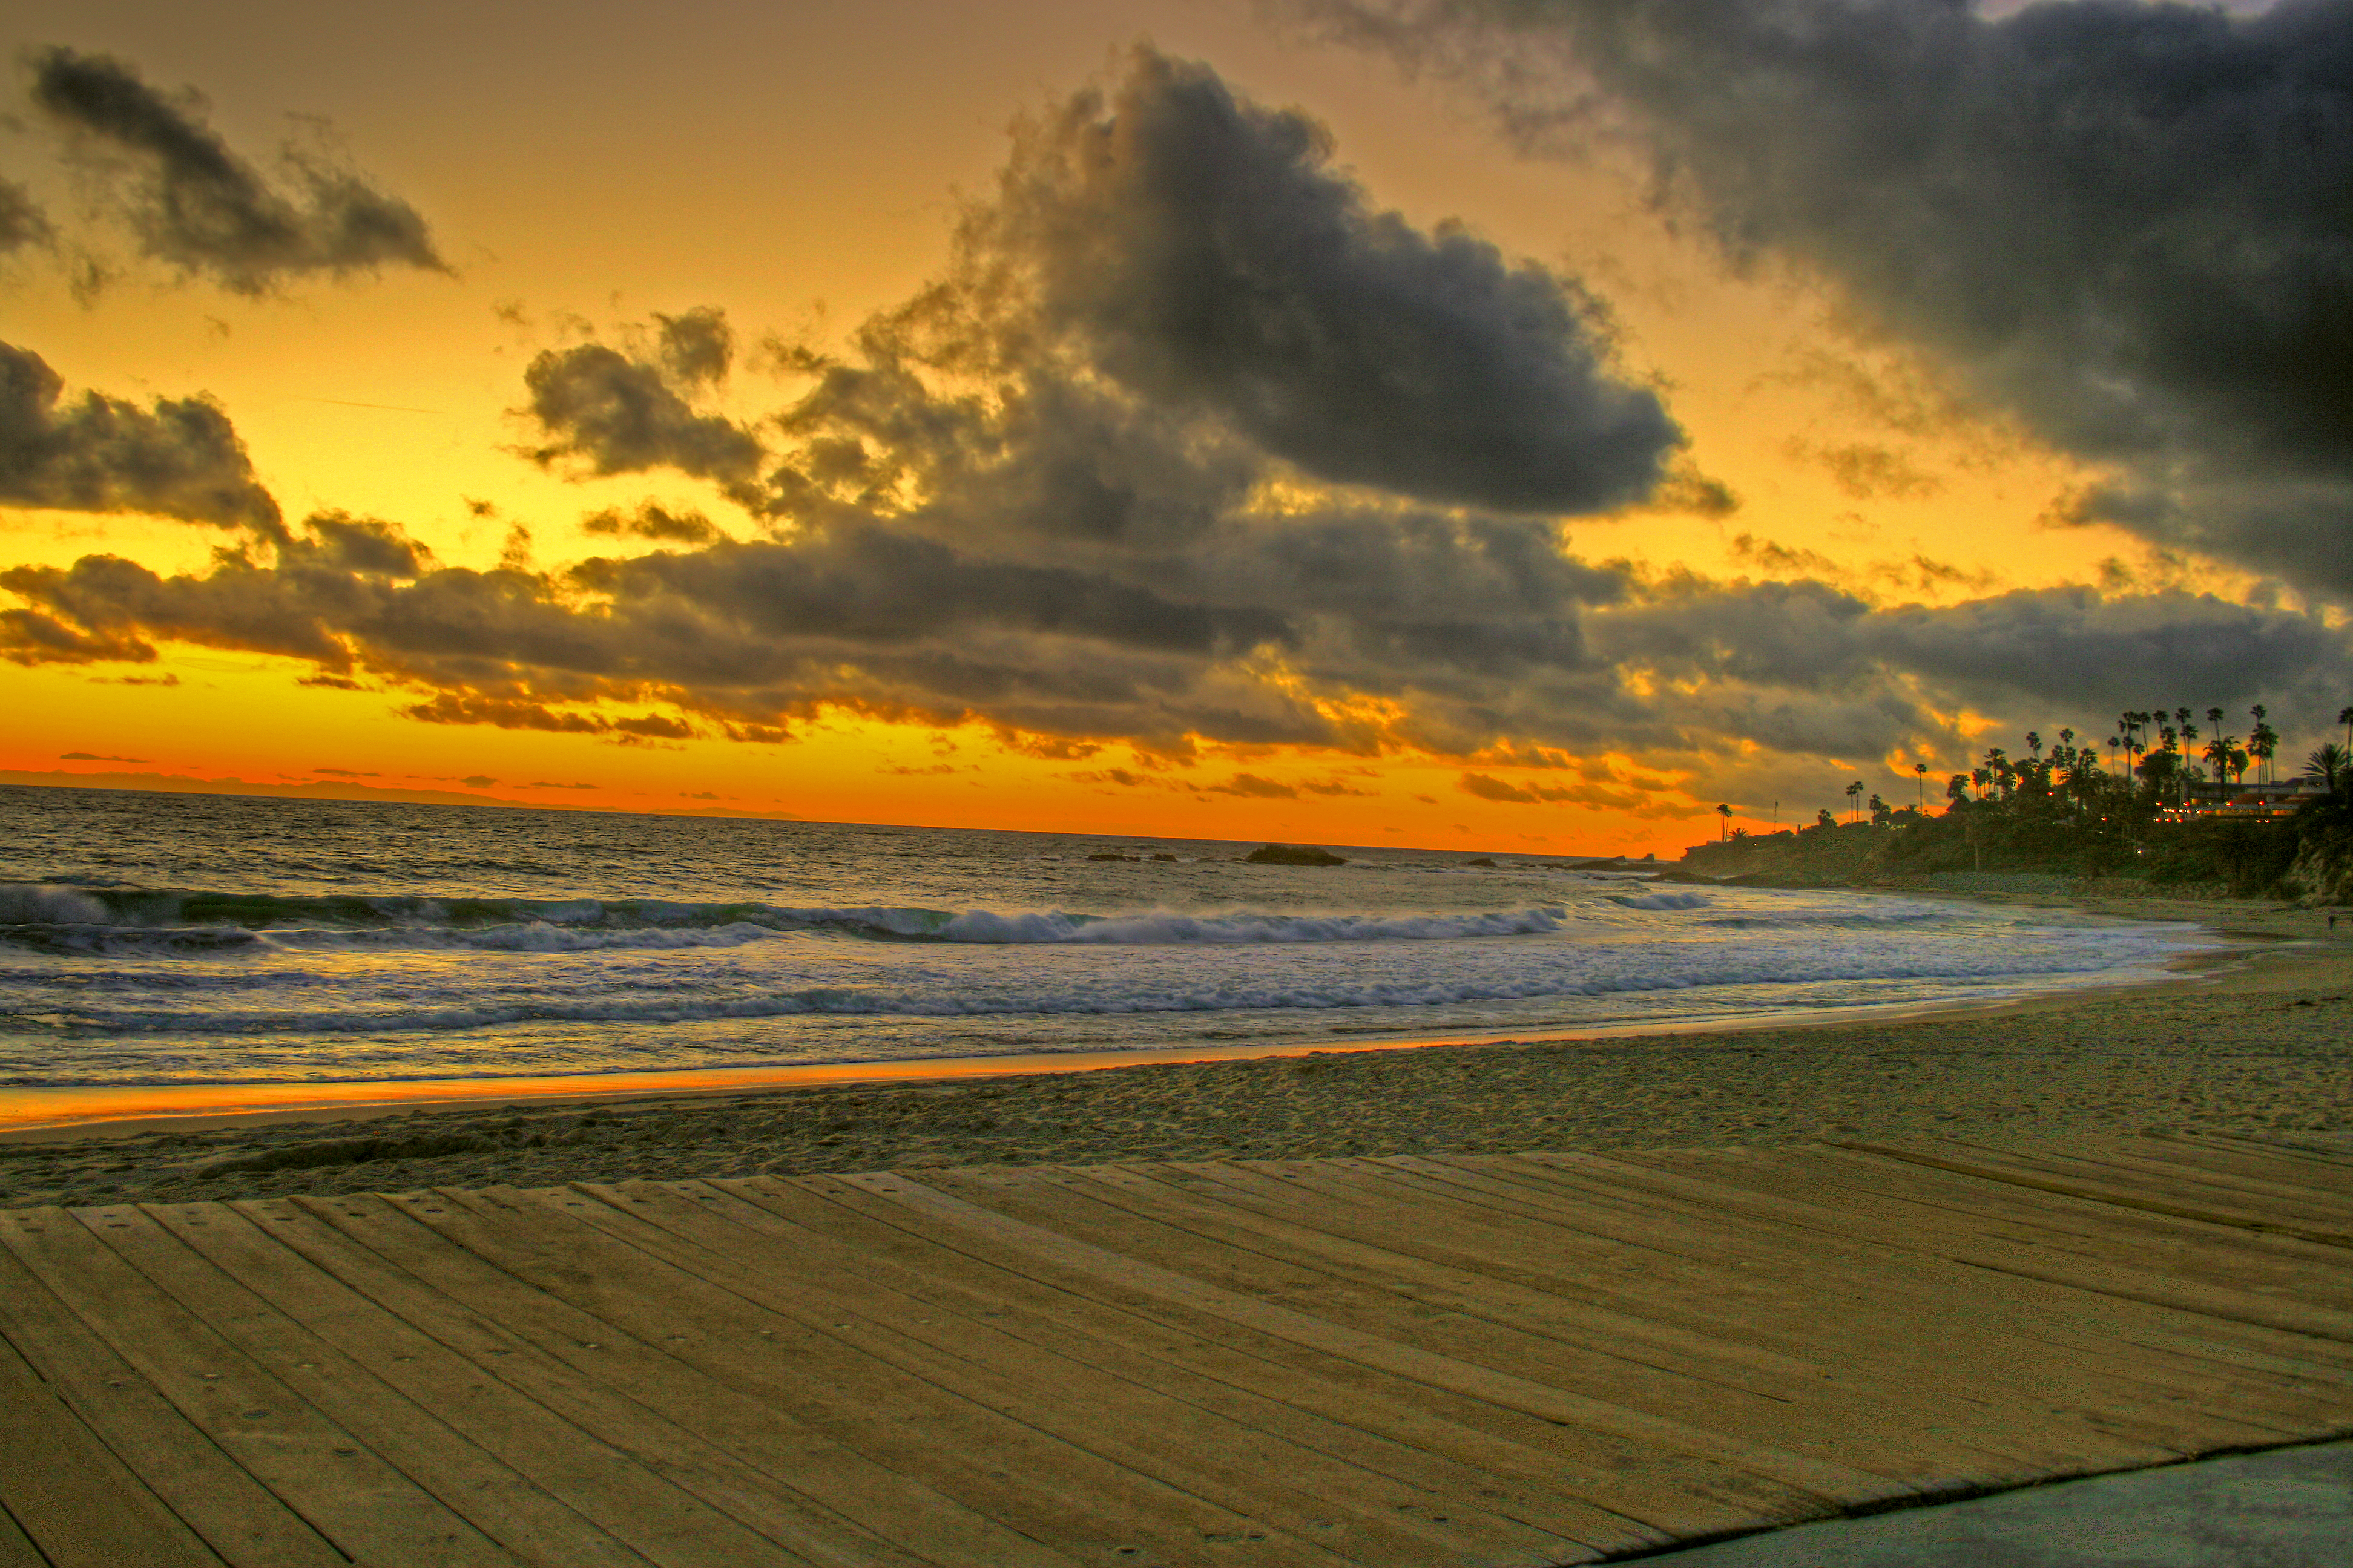  httpmi9comlaguna beach wallpaper sunset laguna beach 28209html 3887x2591